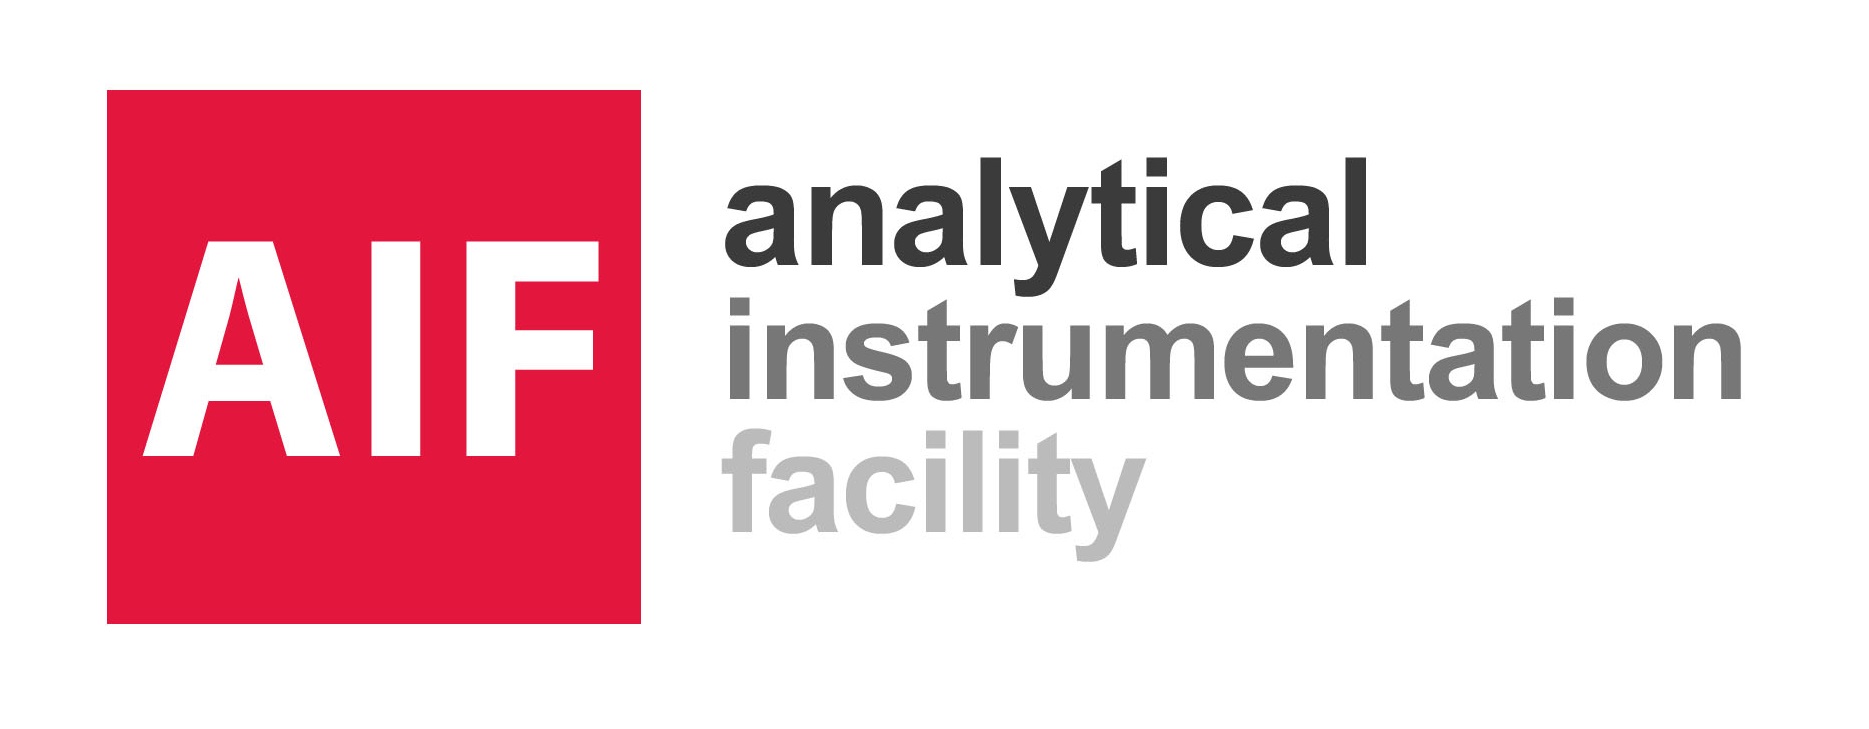 Analytical Instrumentation Facility (AIF)